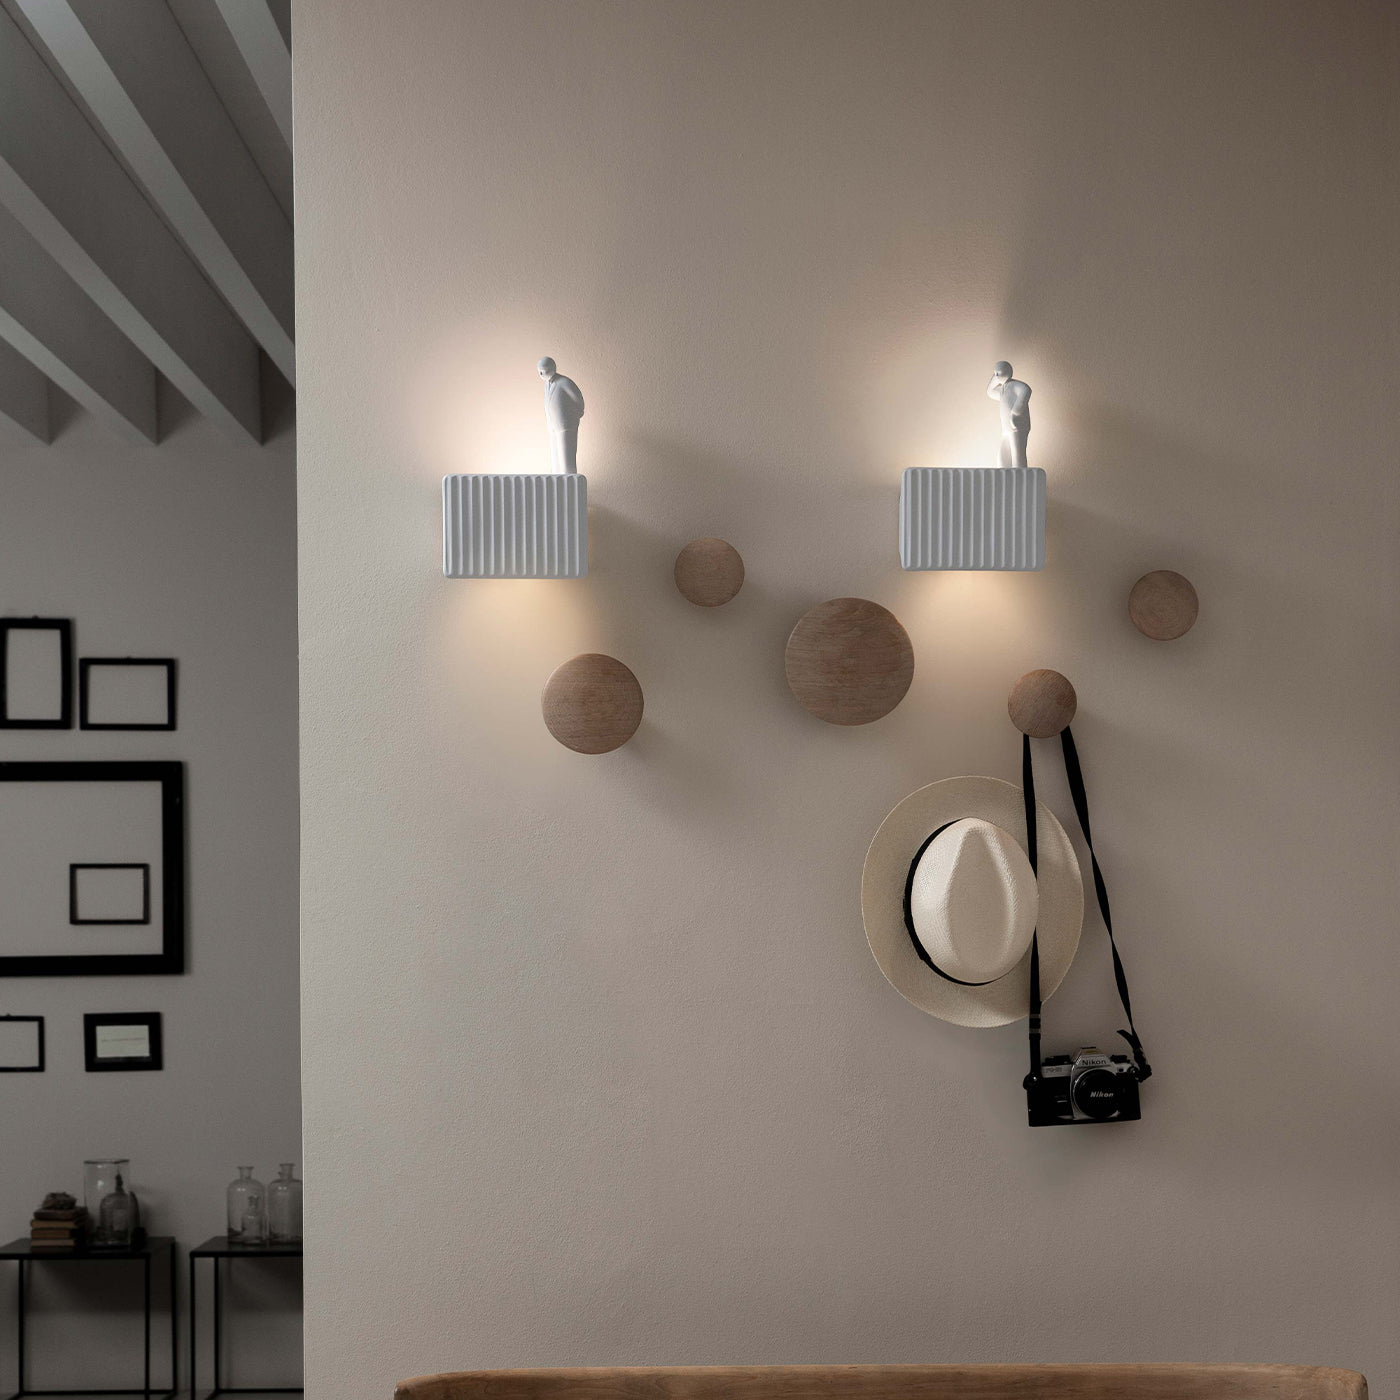 Umarell Wall Lamp by Giorgio Biscaro #3 - Alternative view 3